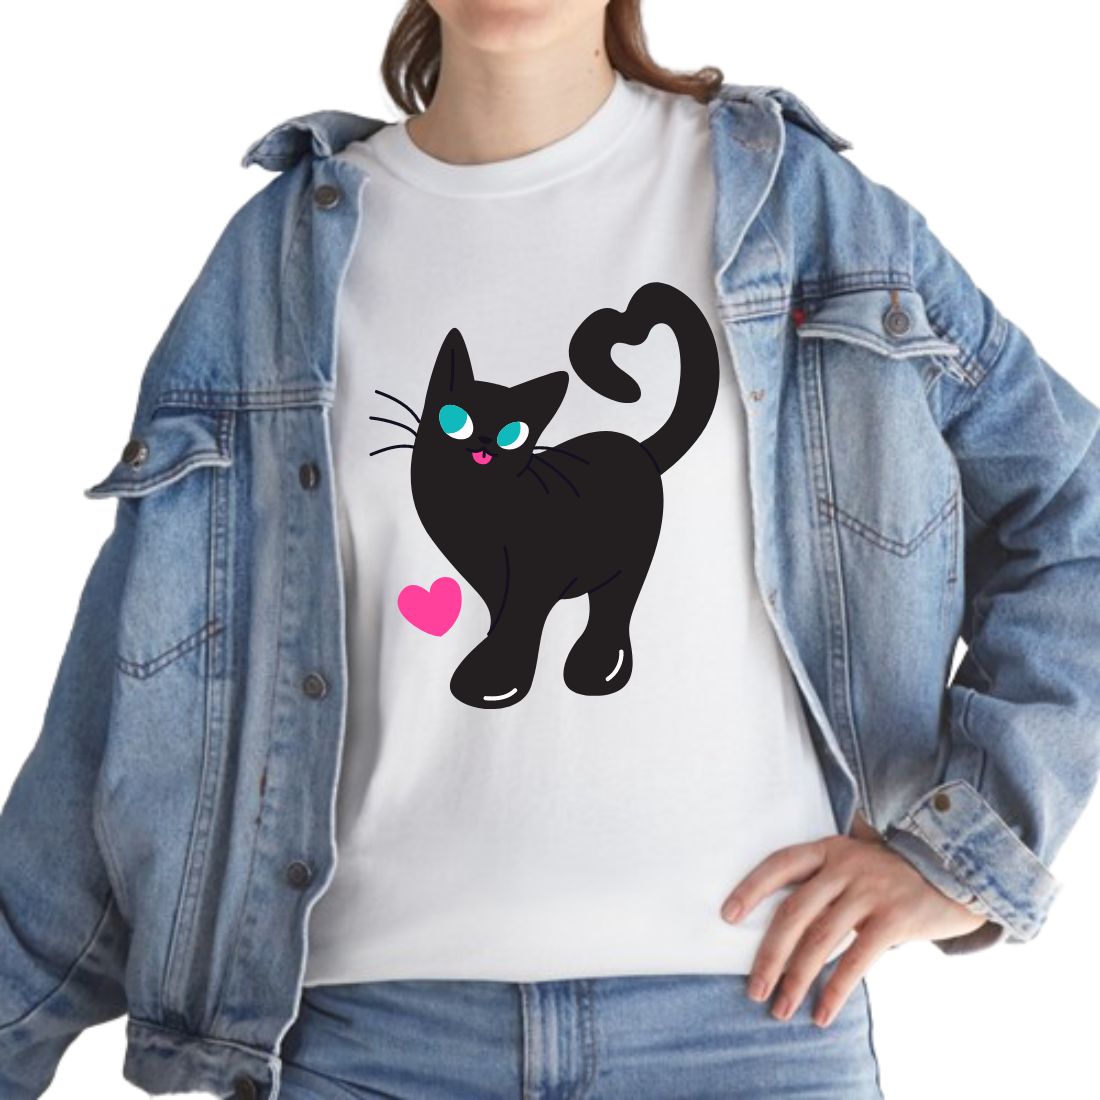 Cute cat T Shirt Design preview image.